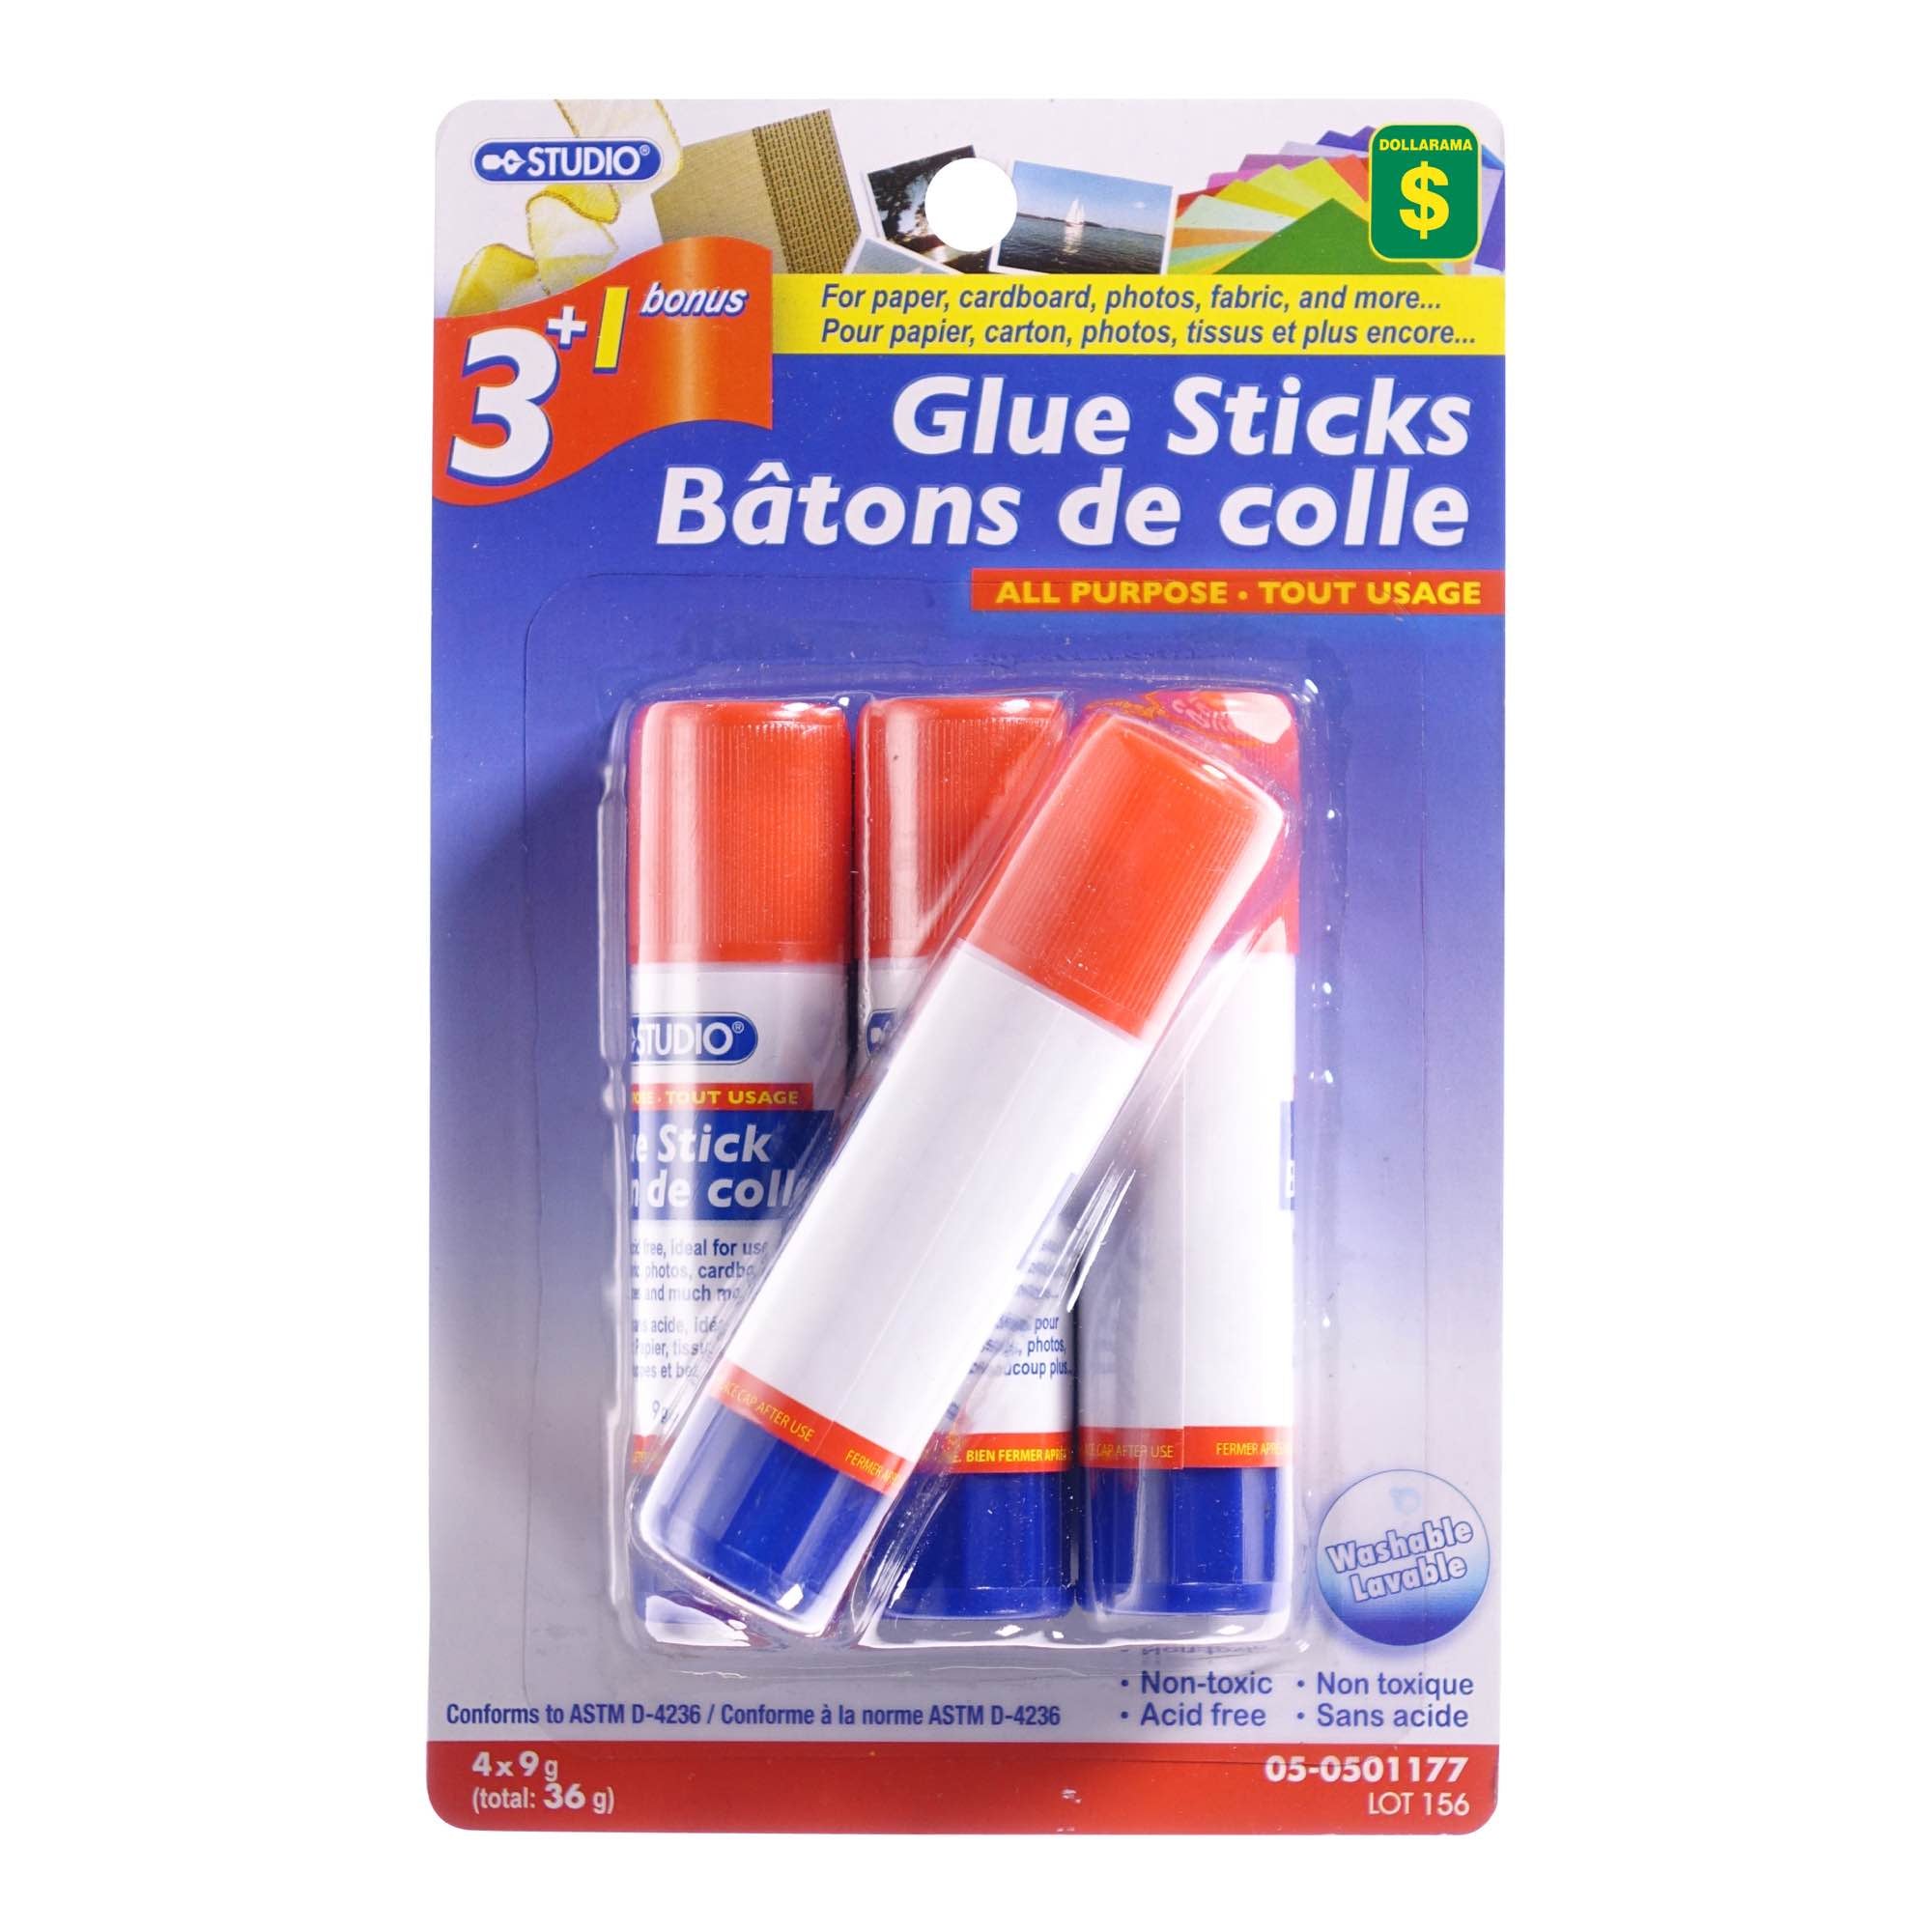 Studio Glue Sticks, Washable,  3+1 Bonus, 4x9g